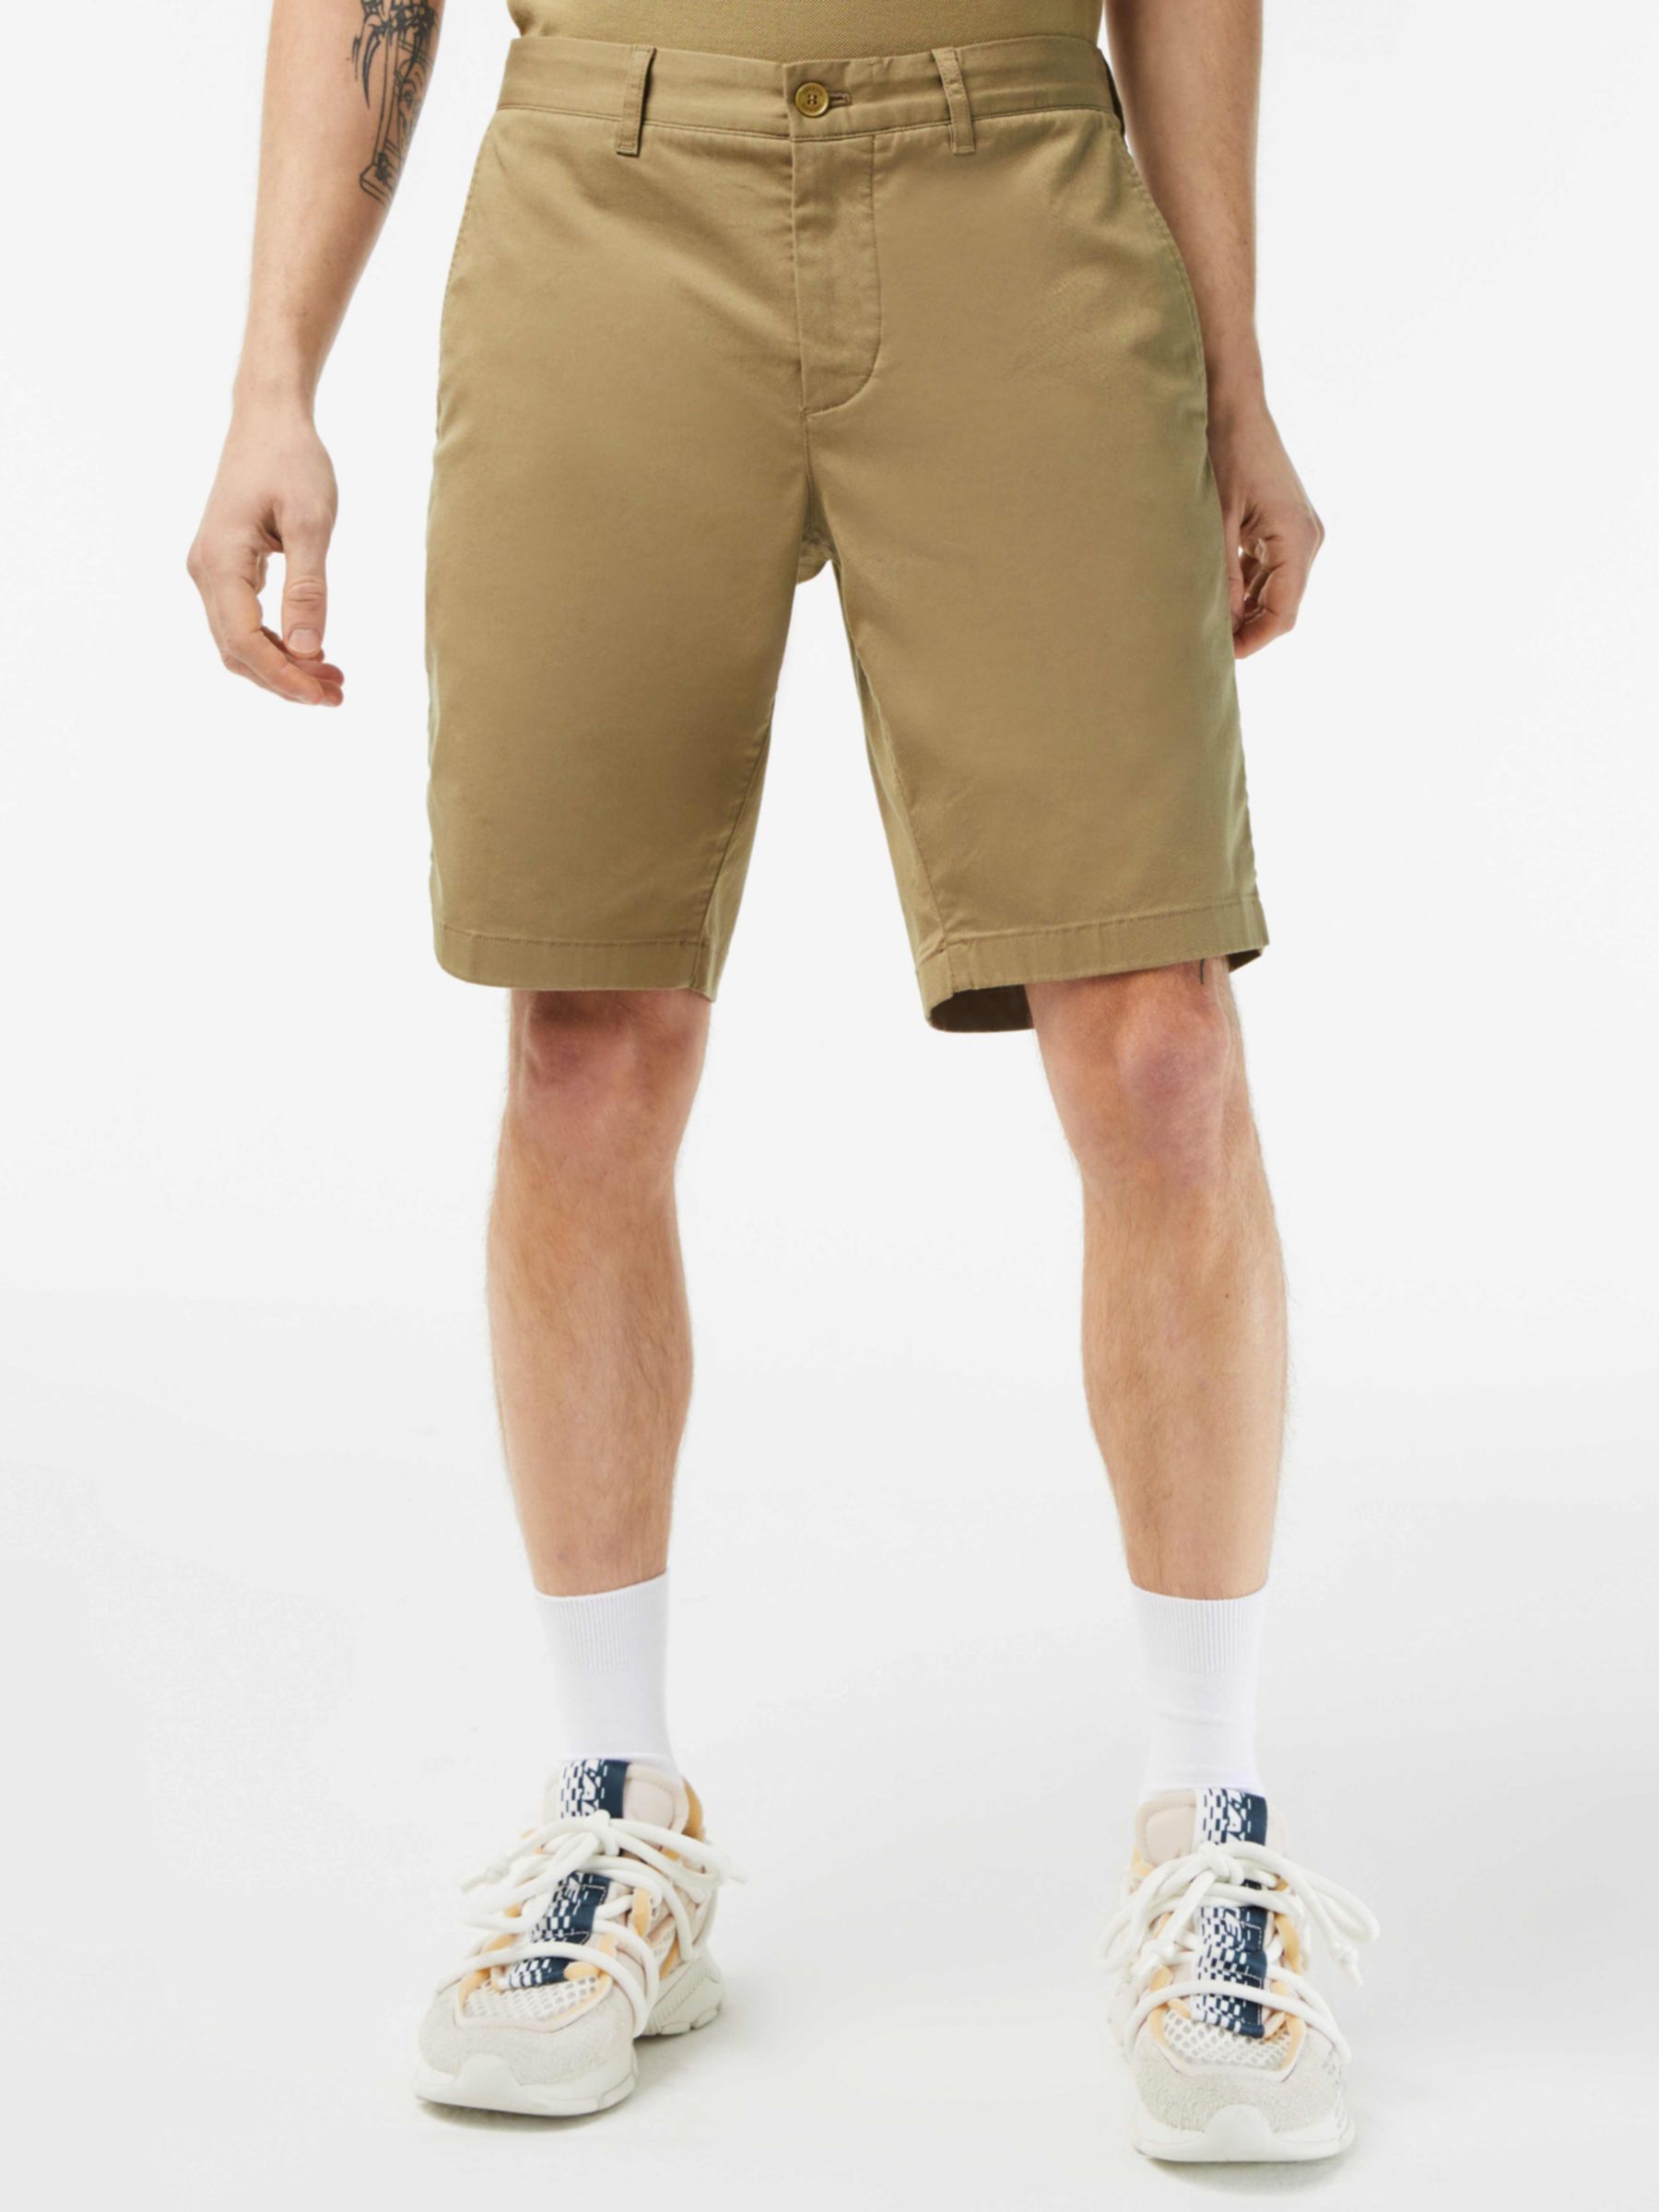 Lacoste Core Essentials Slim Fit Stretch Bermuda Shorts, Lion, S